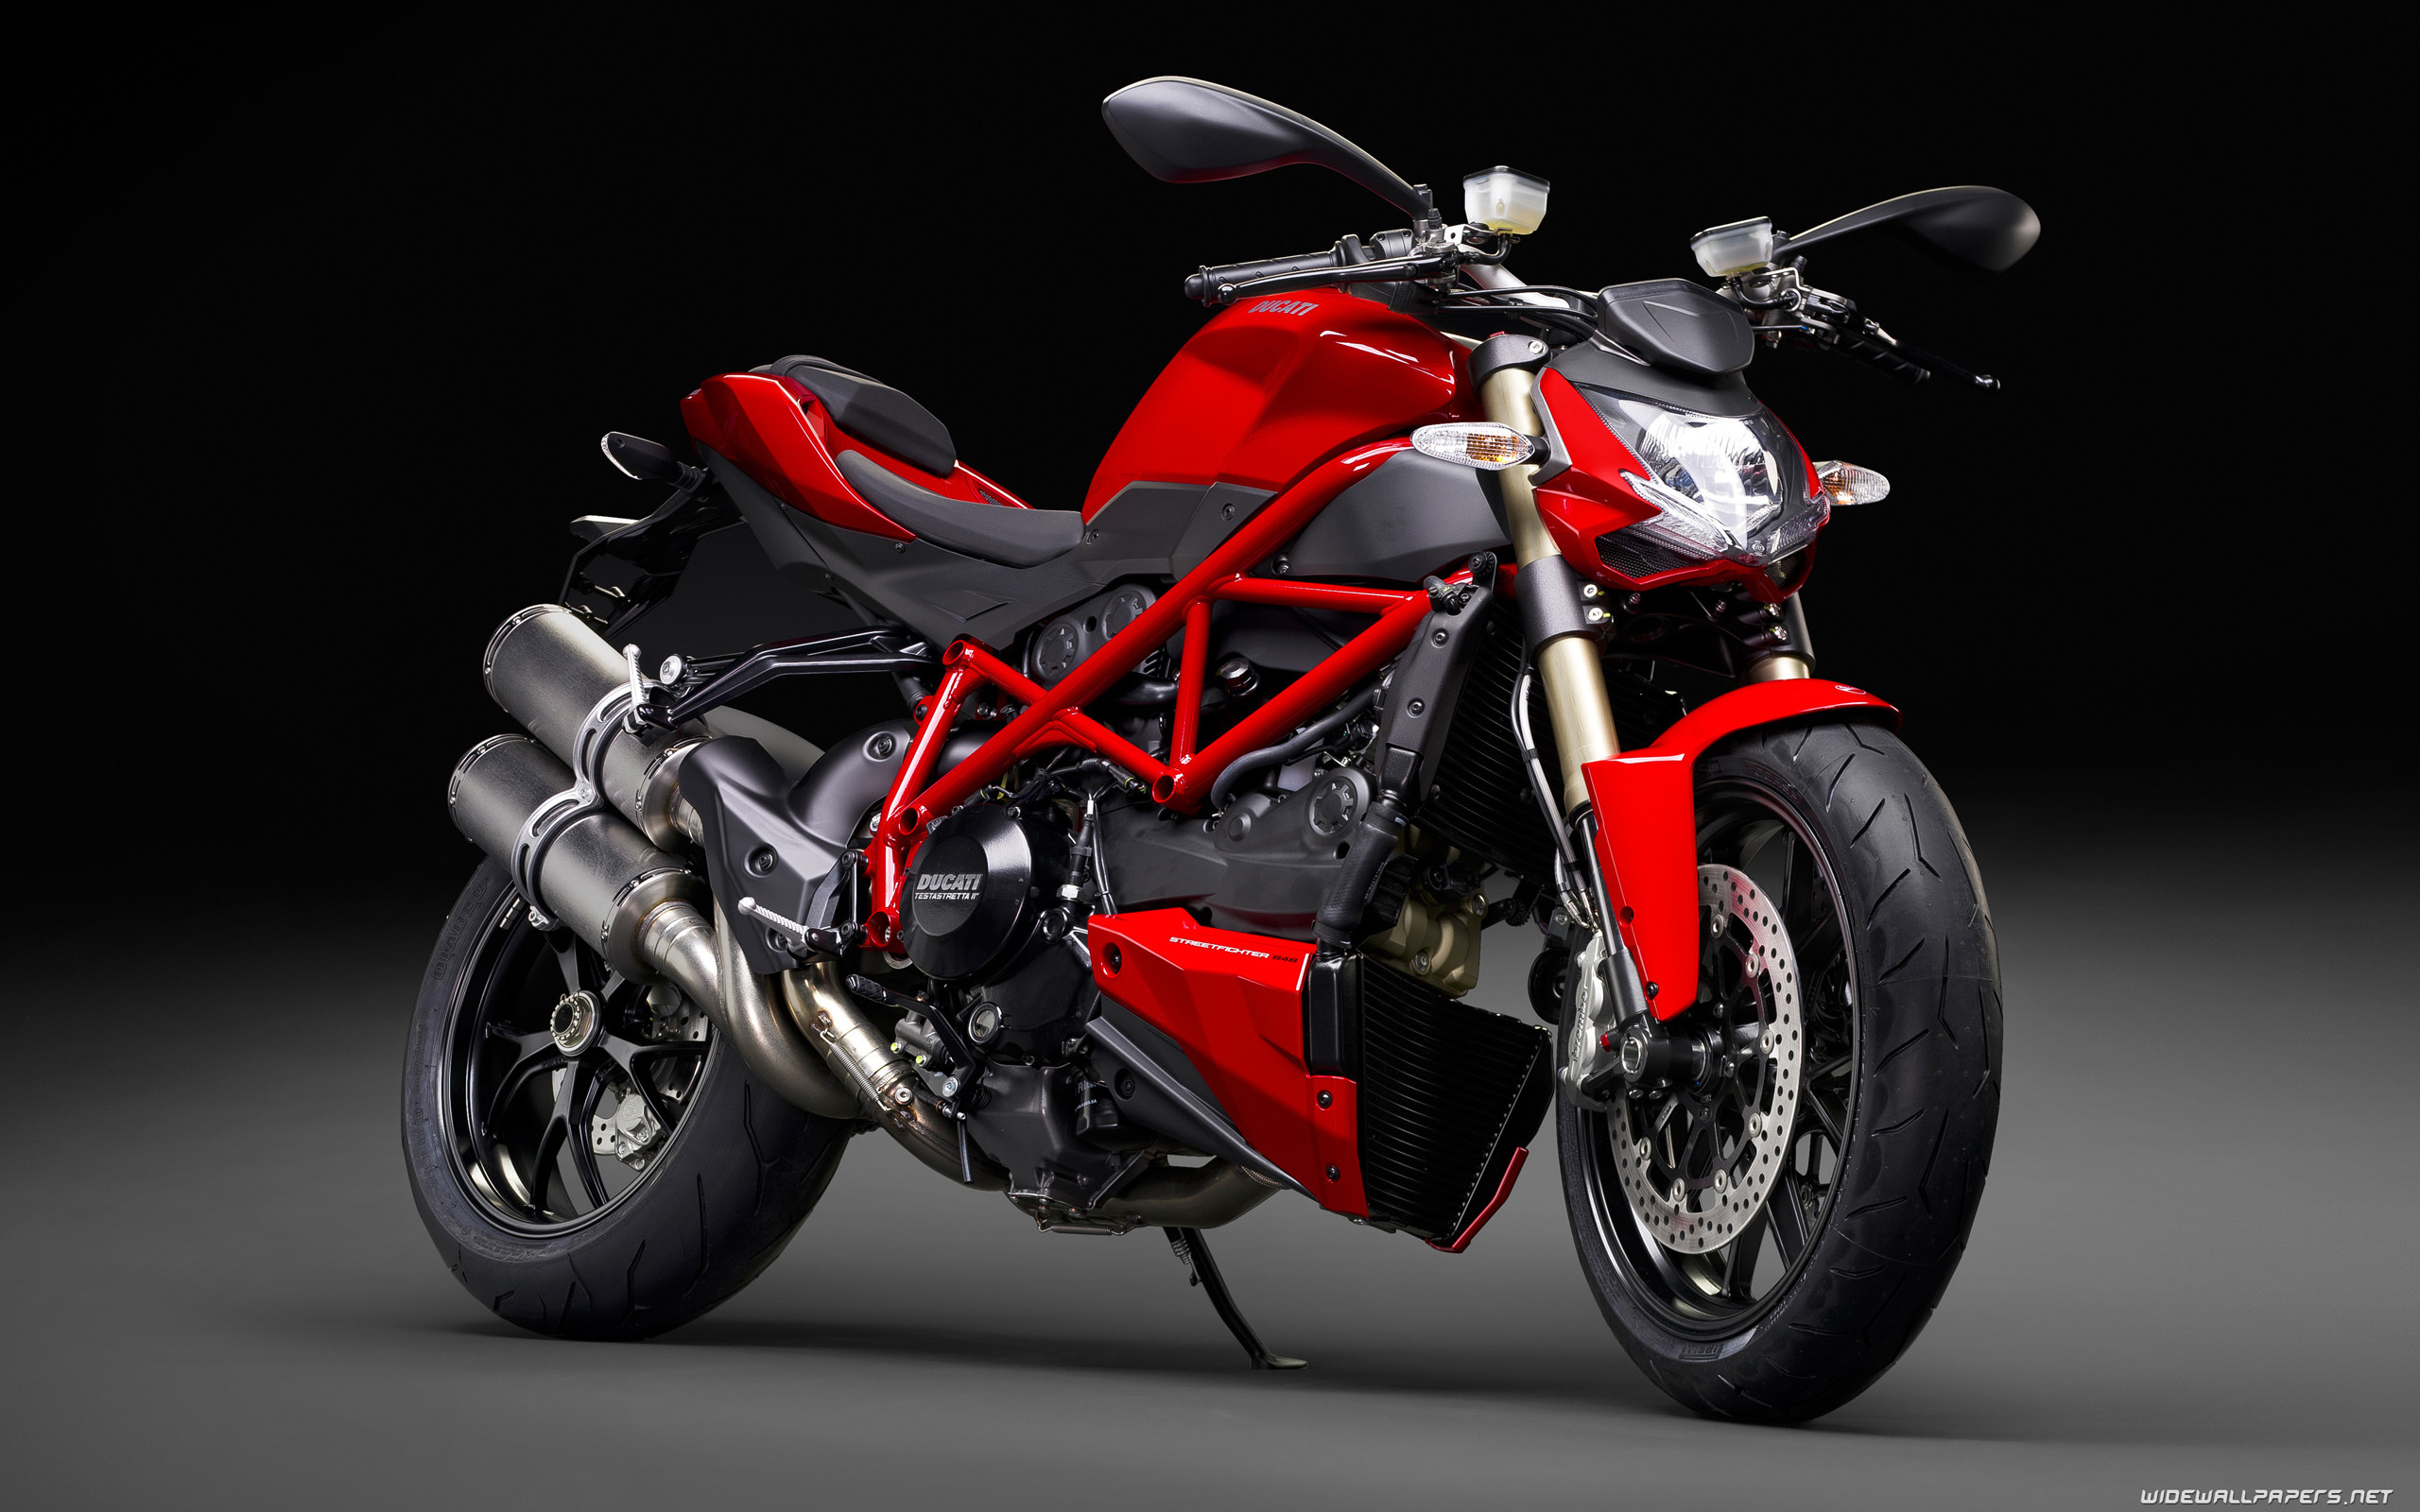 2560x1600 Ducati Streetfighter 848 Motorcycle Desktop Wallpapers 4k